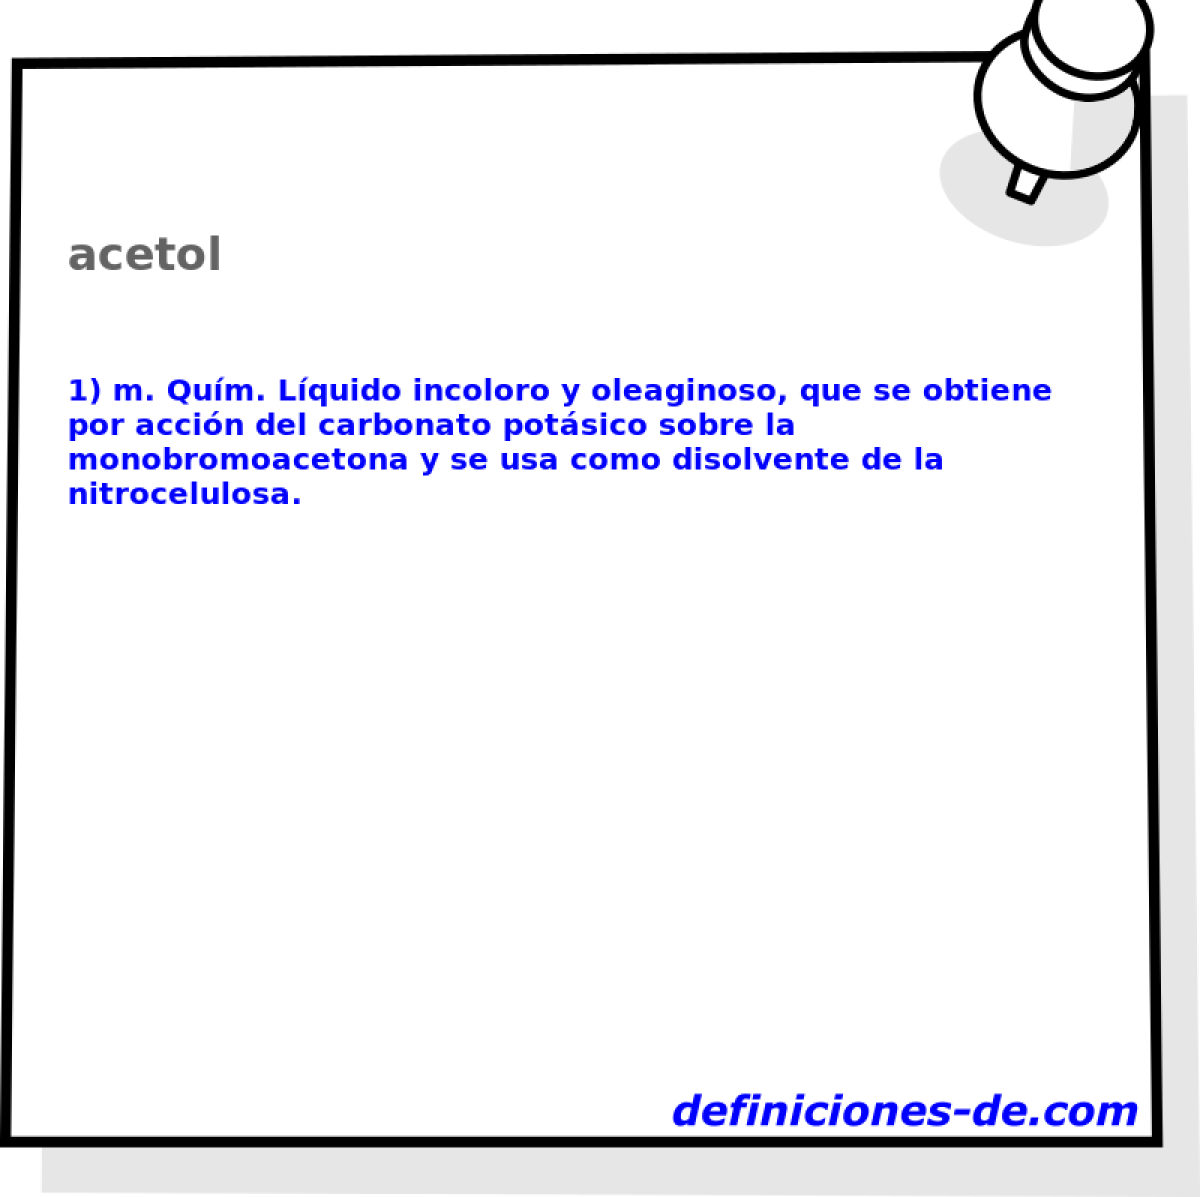 acetol 